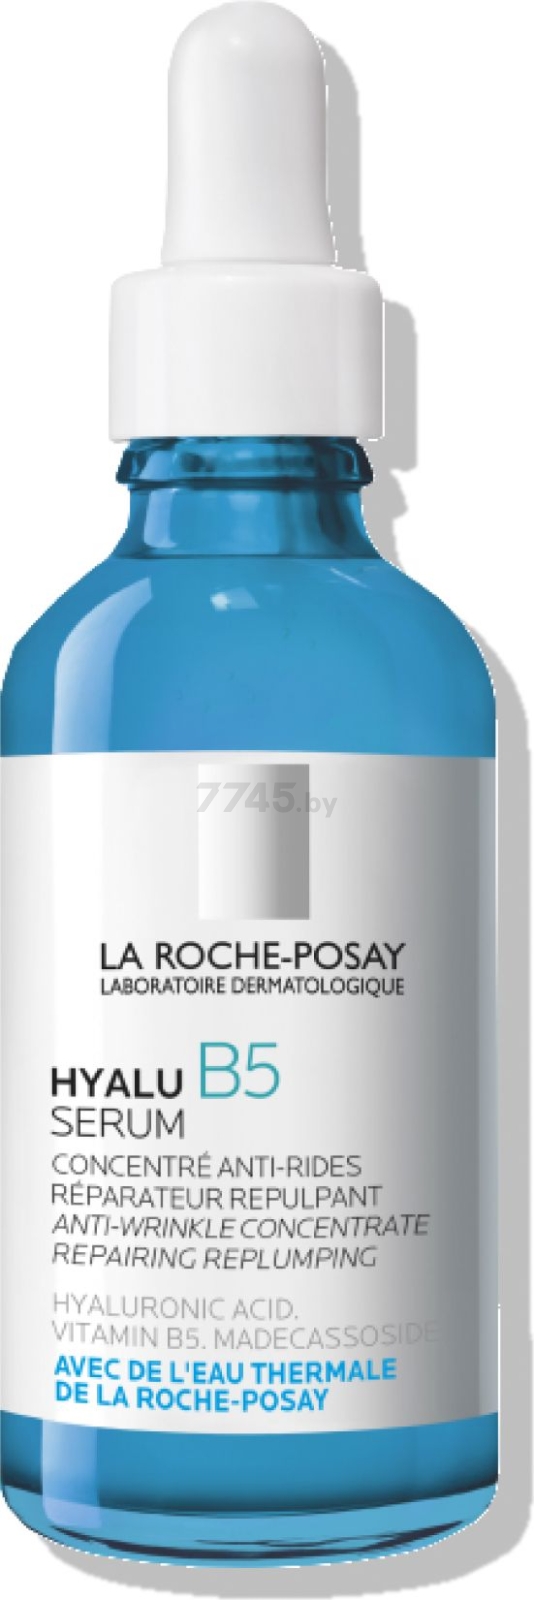 Сыворотка LA ROCHE-POSAY Hyalu B5 концентрированная увлажняющая против морщин 50 мл (3337875683739)